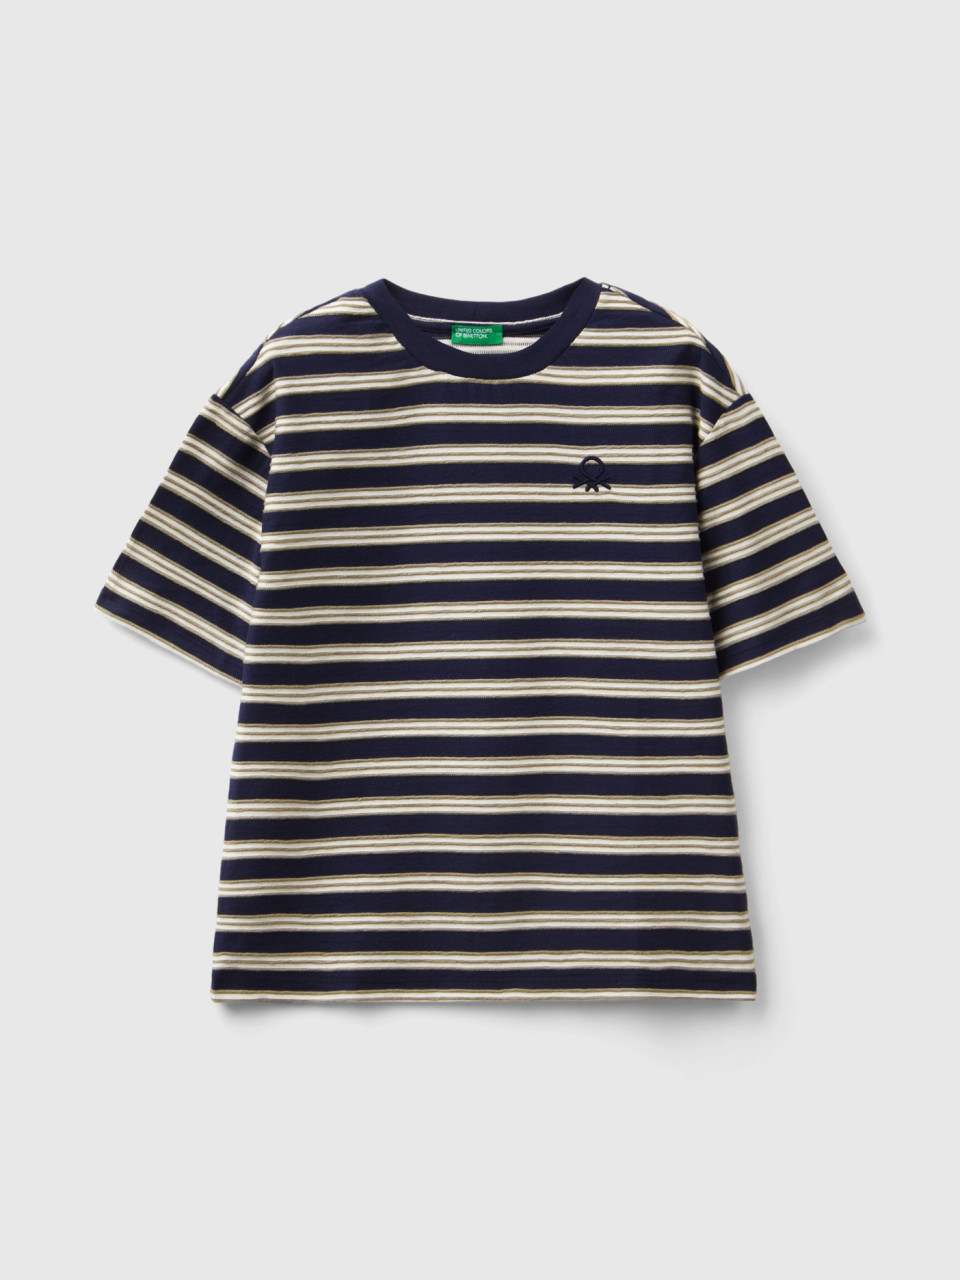 Benetton, Oversized Striped T-shirt, Dark Blue, Kids